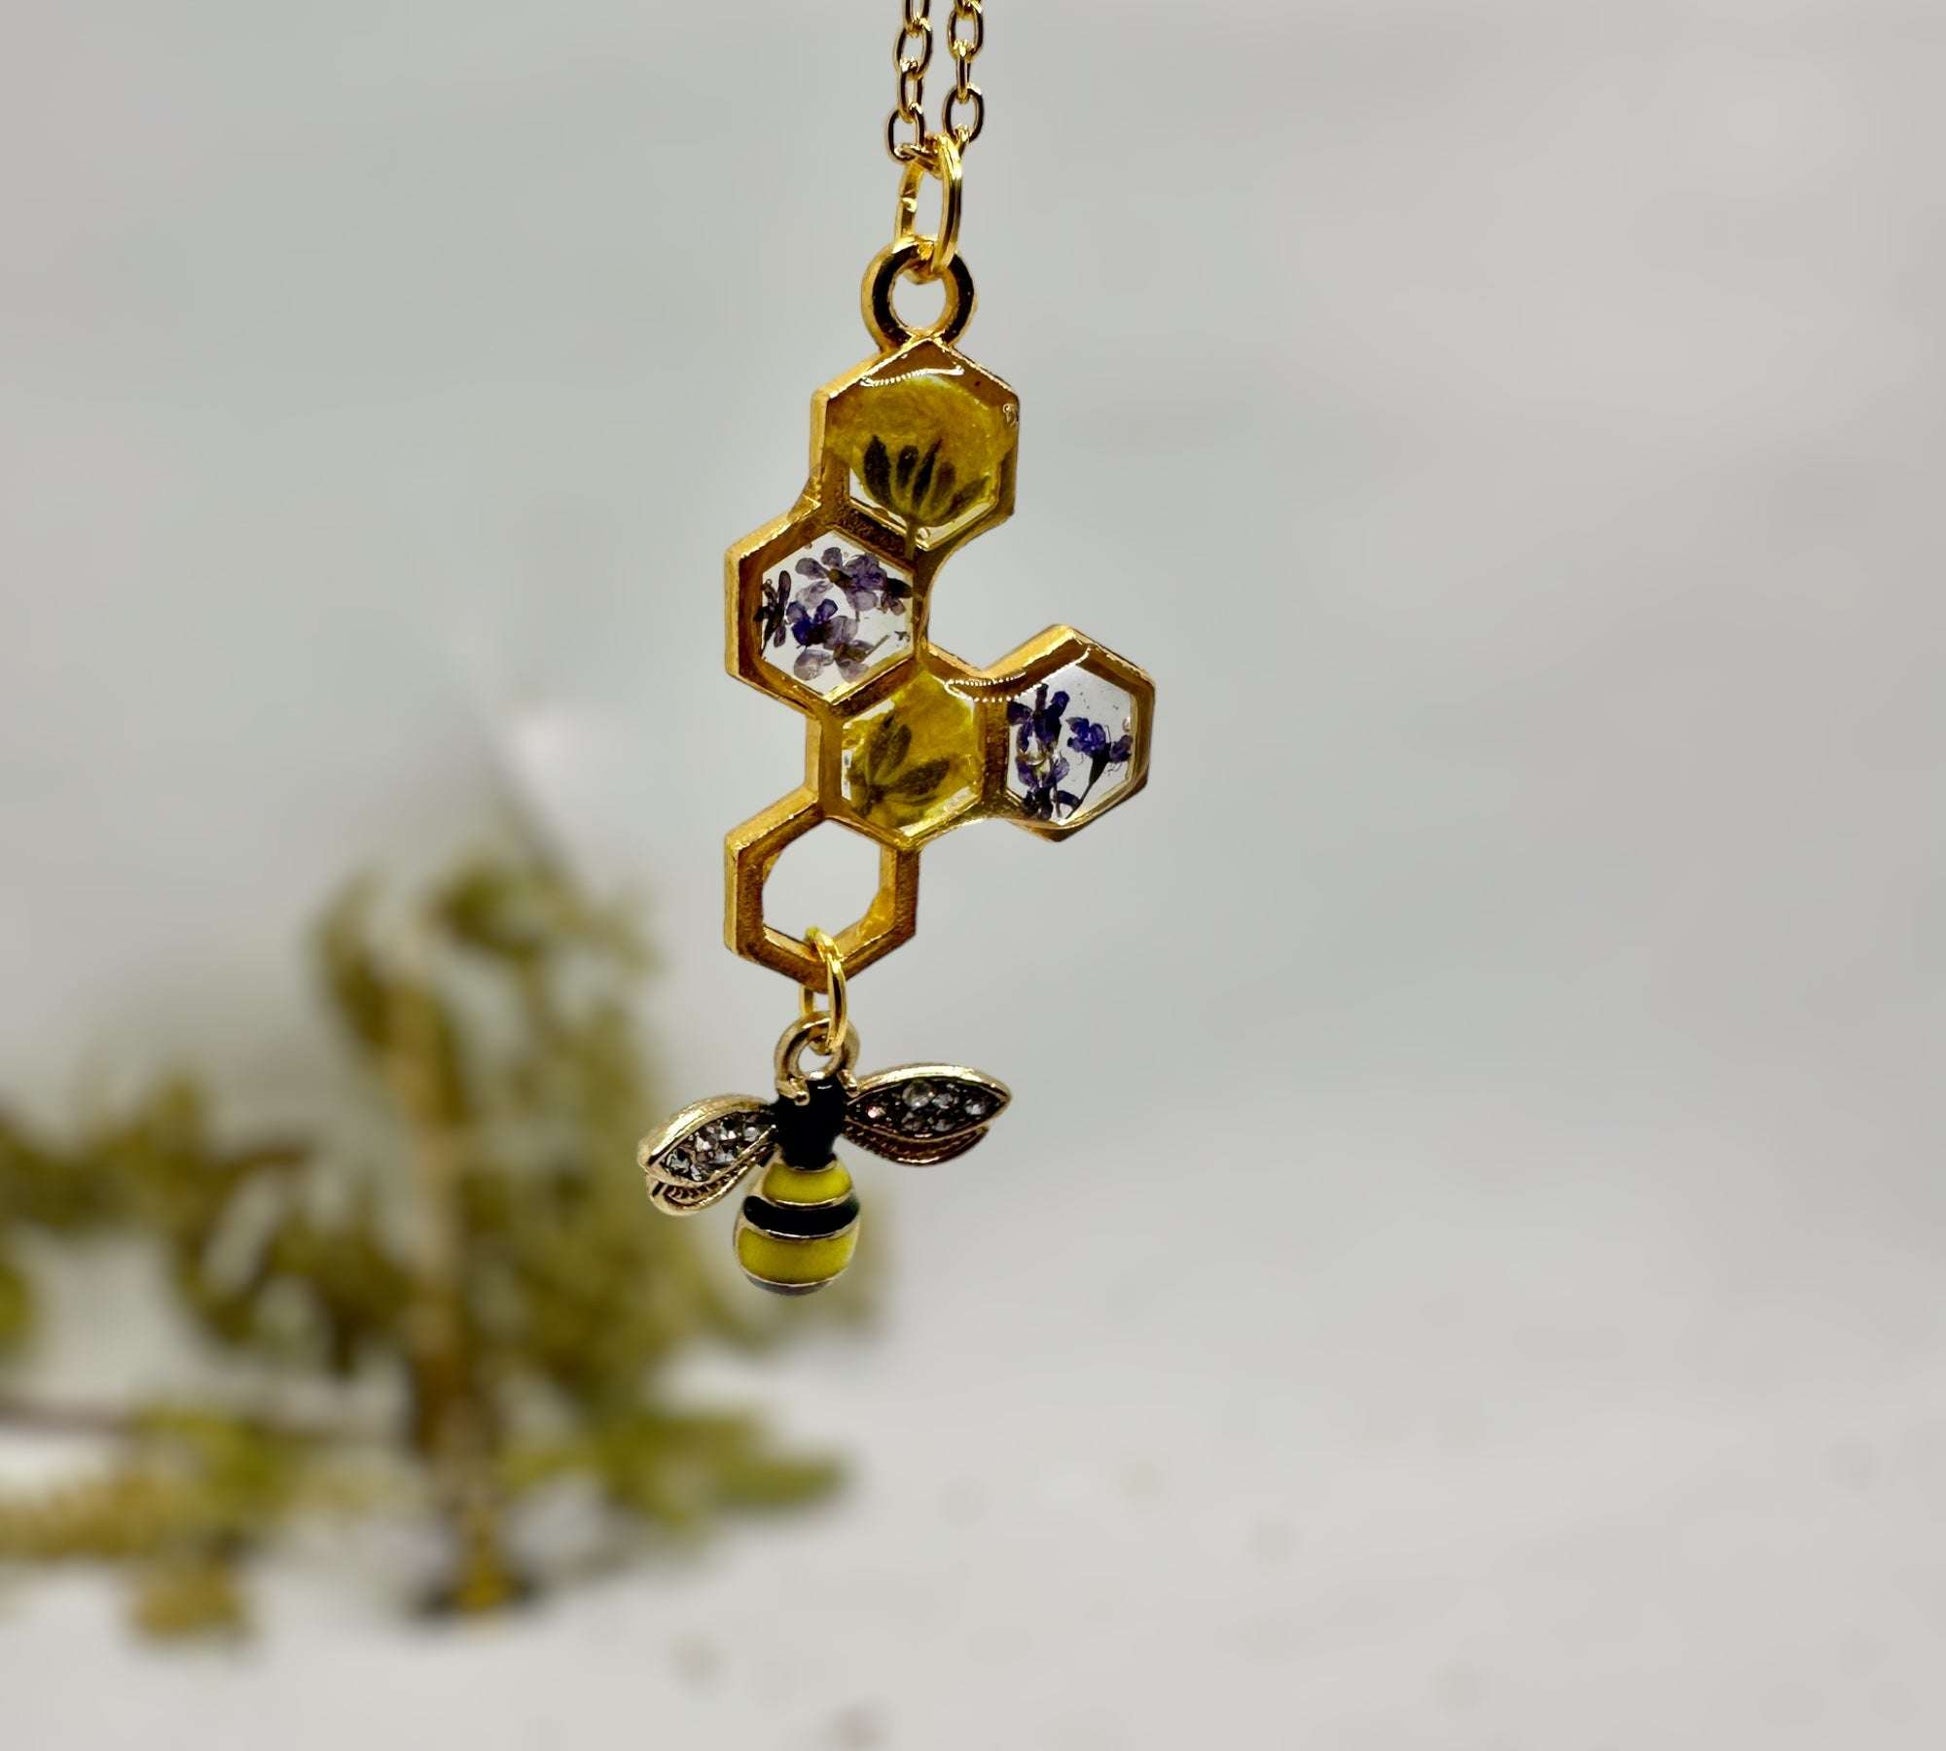 Bee Harmony Pendant - Handmade Pendant with Rhinestone Bee Charm